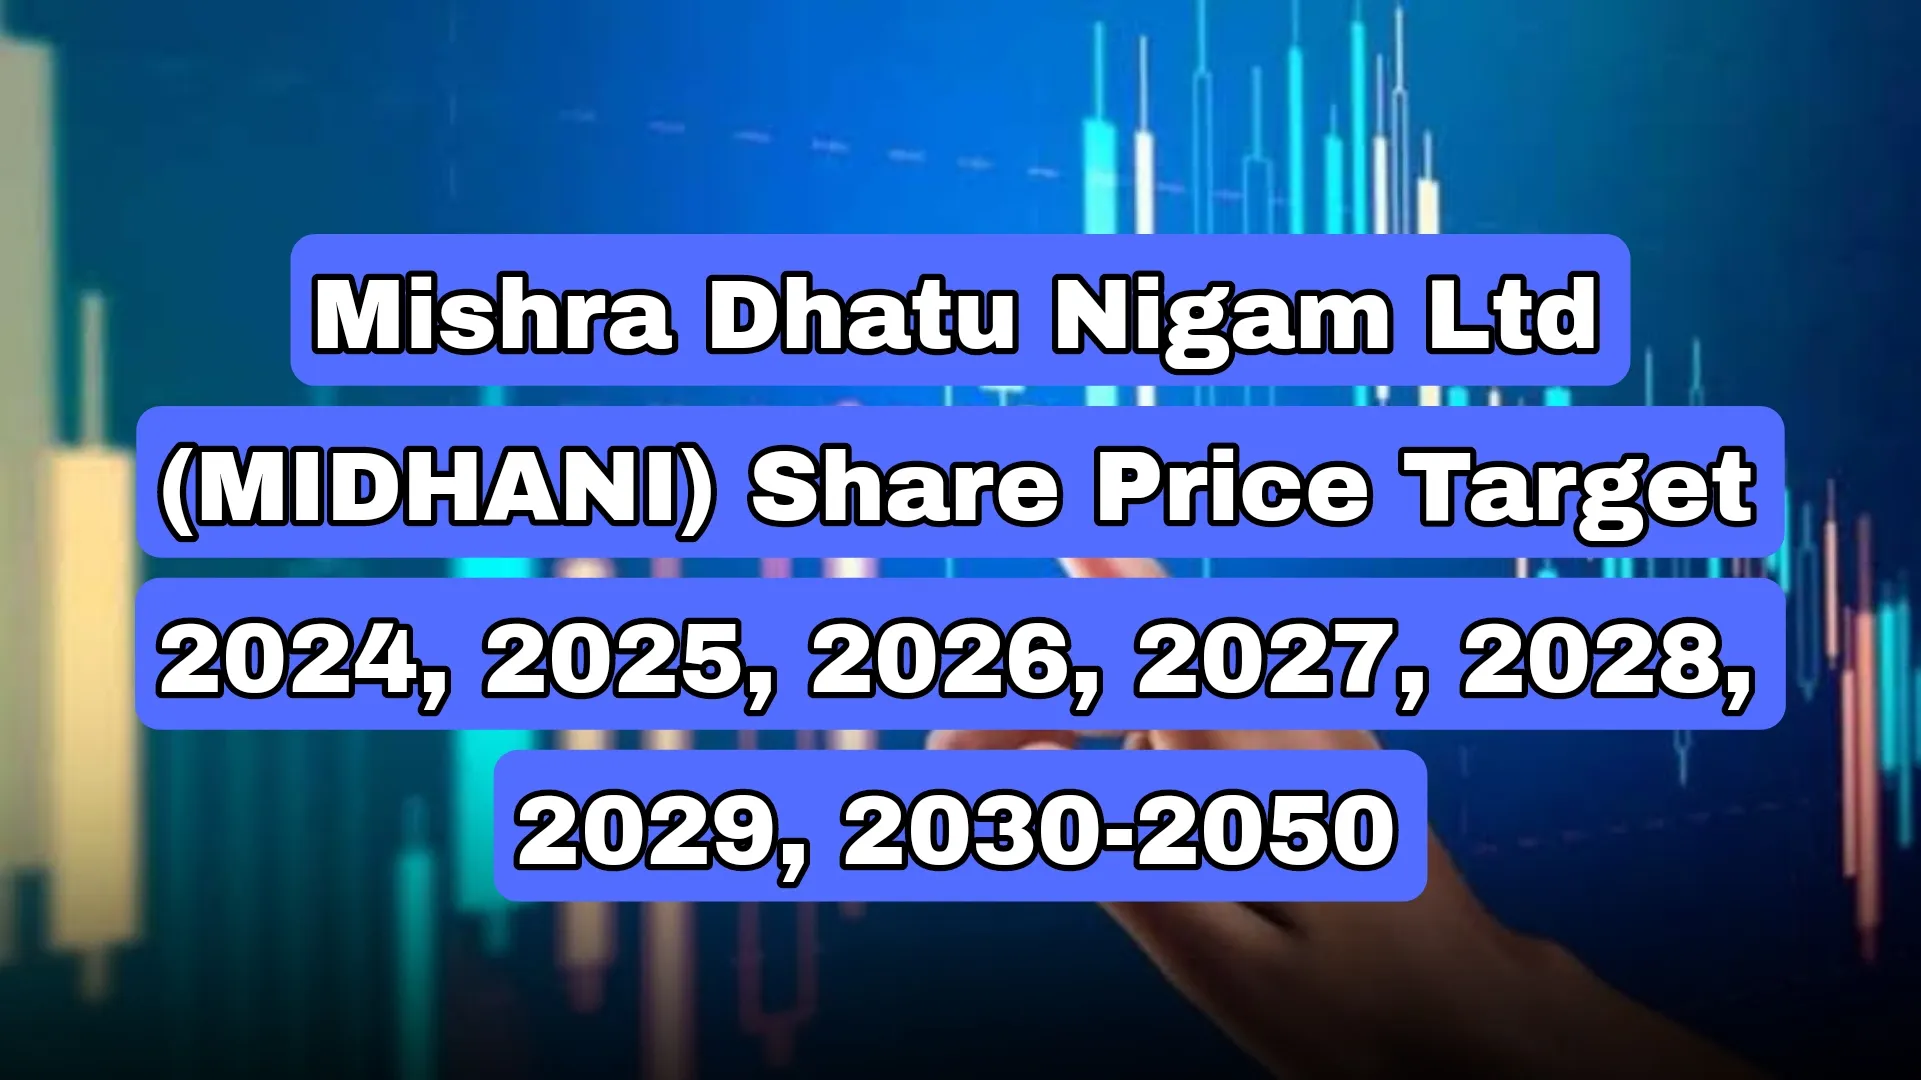 MIDHANI Share Price Target